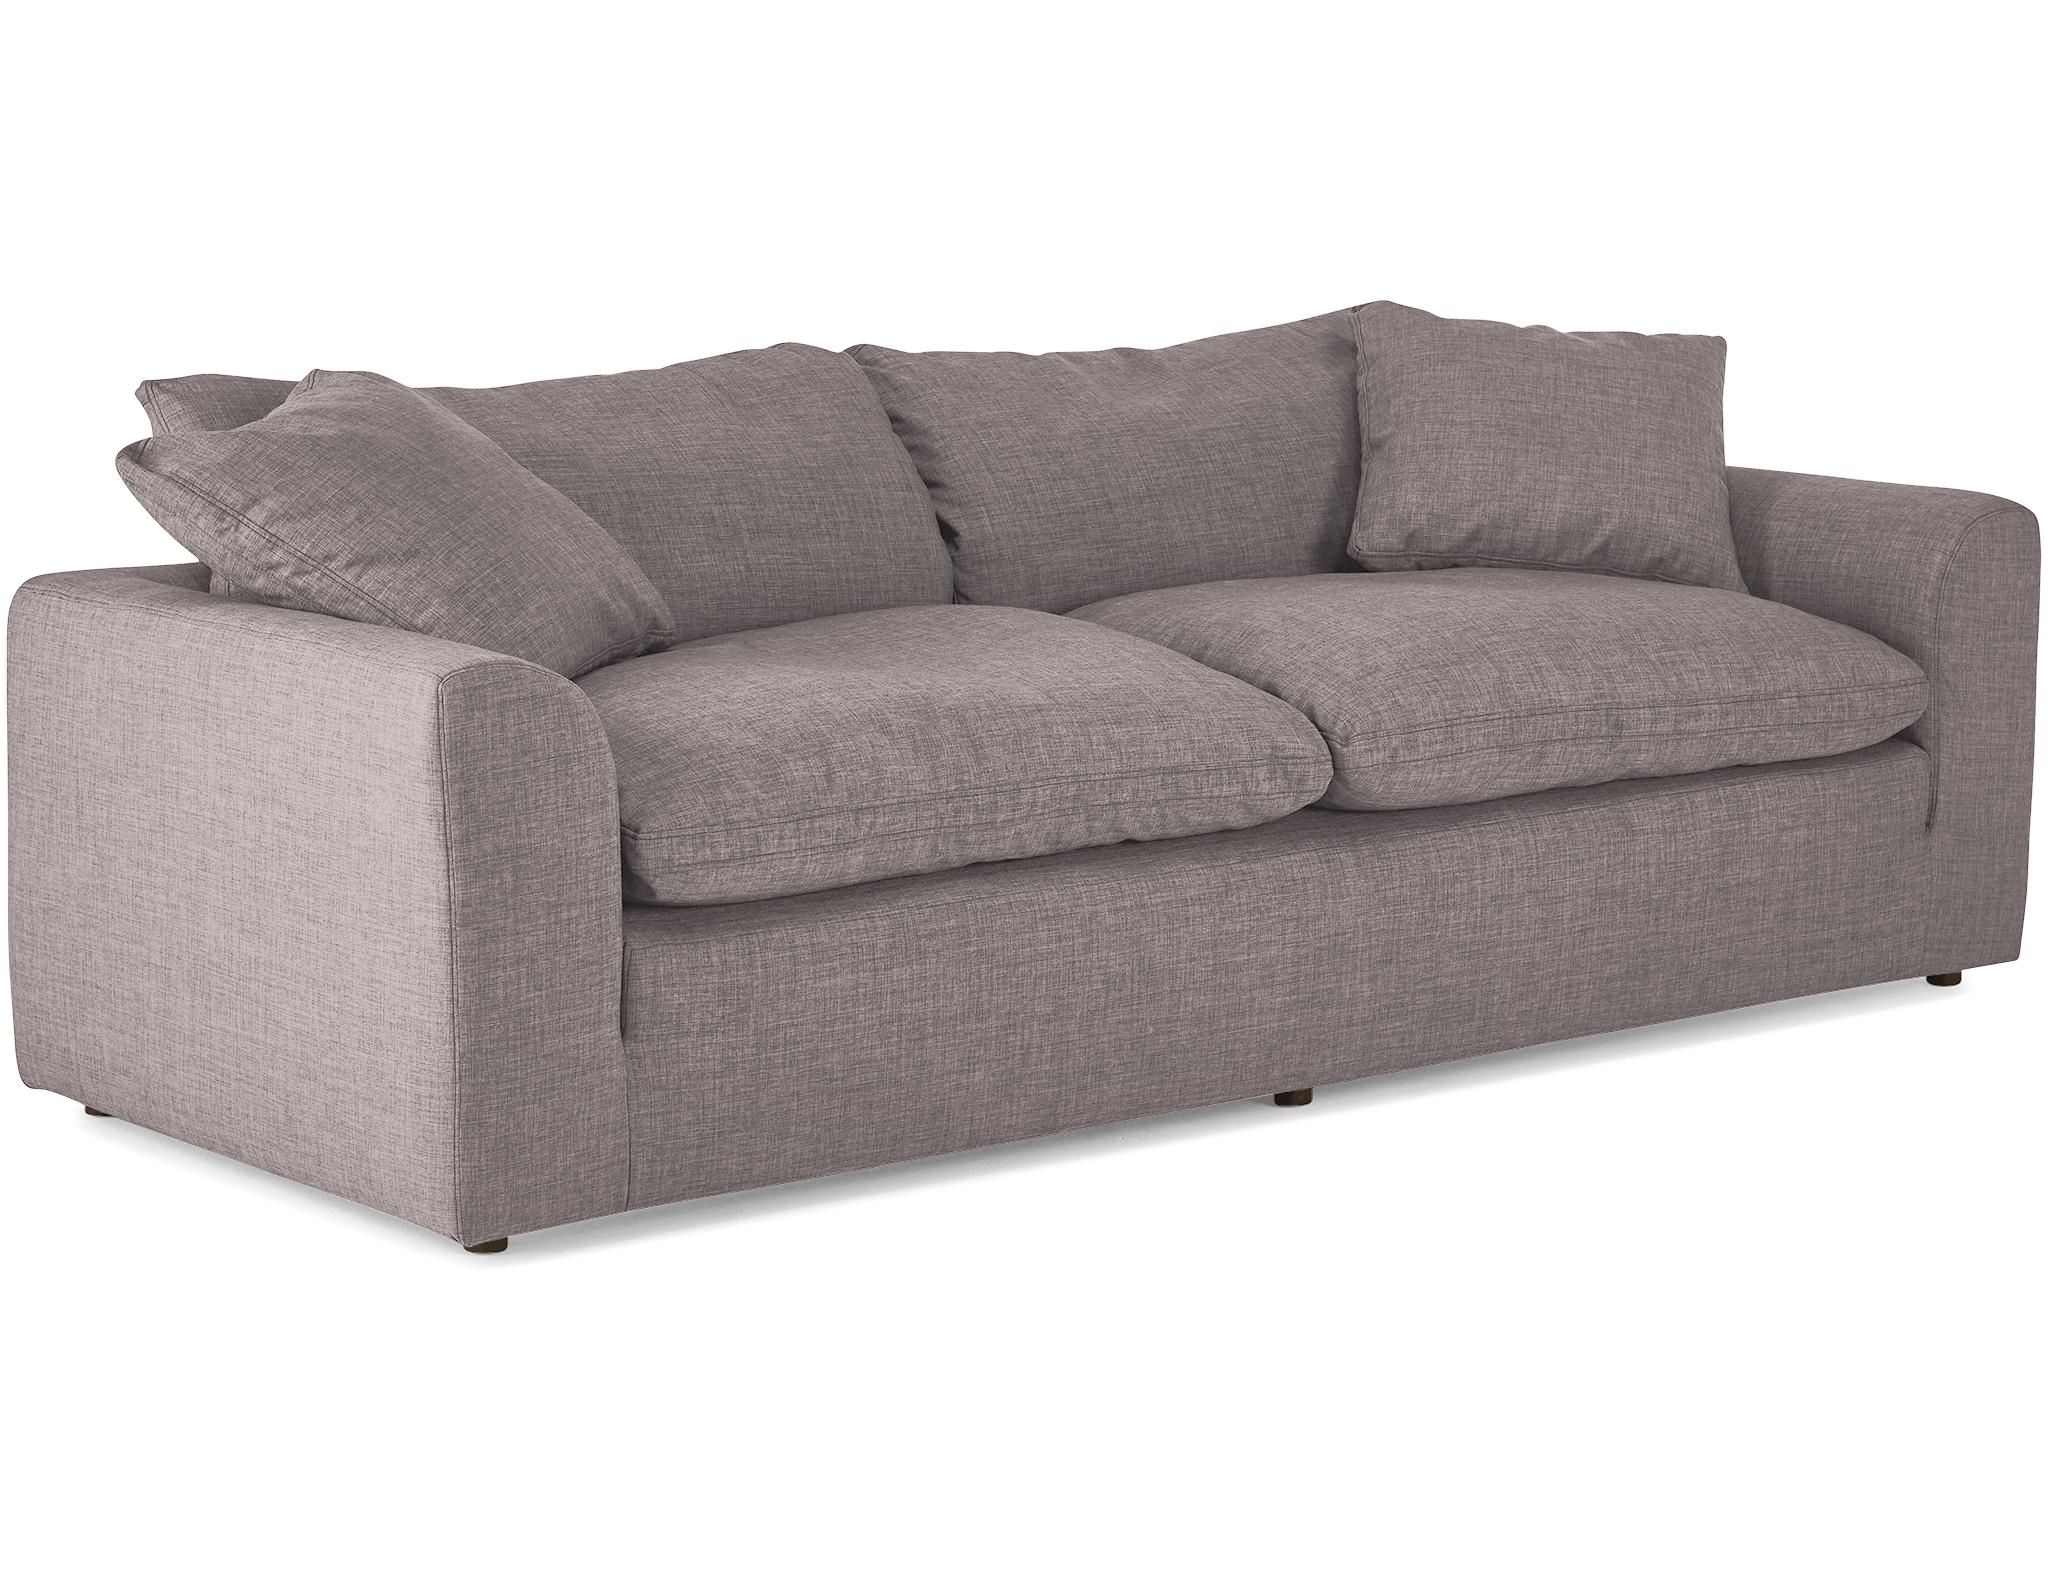 Purple Bryant Mid Century Modern Sofa - Sunbrella Premier Wisteria - Image 1